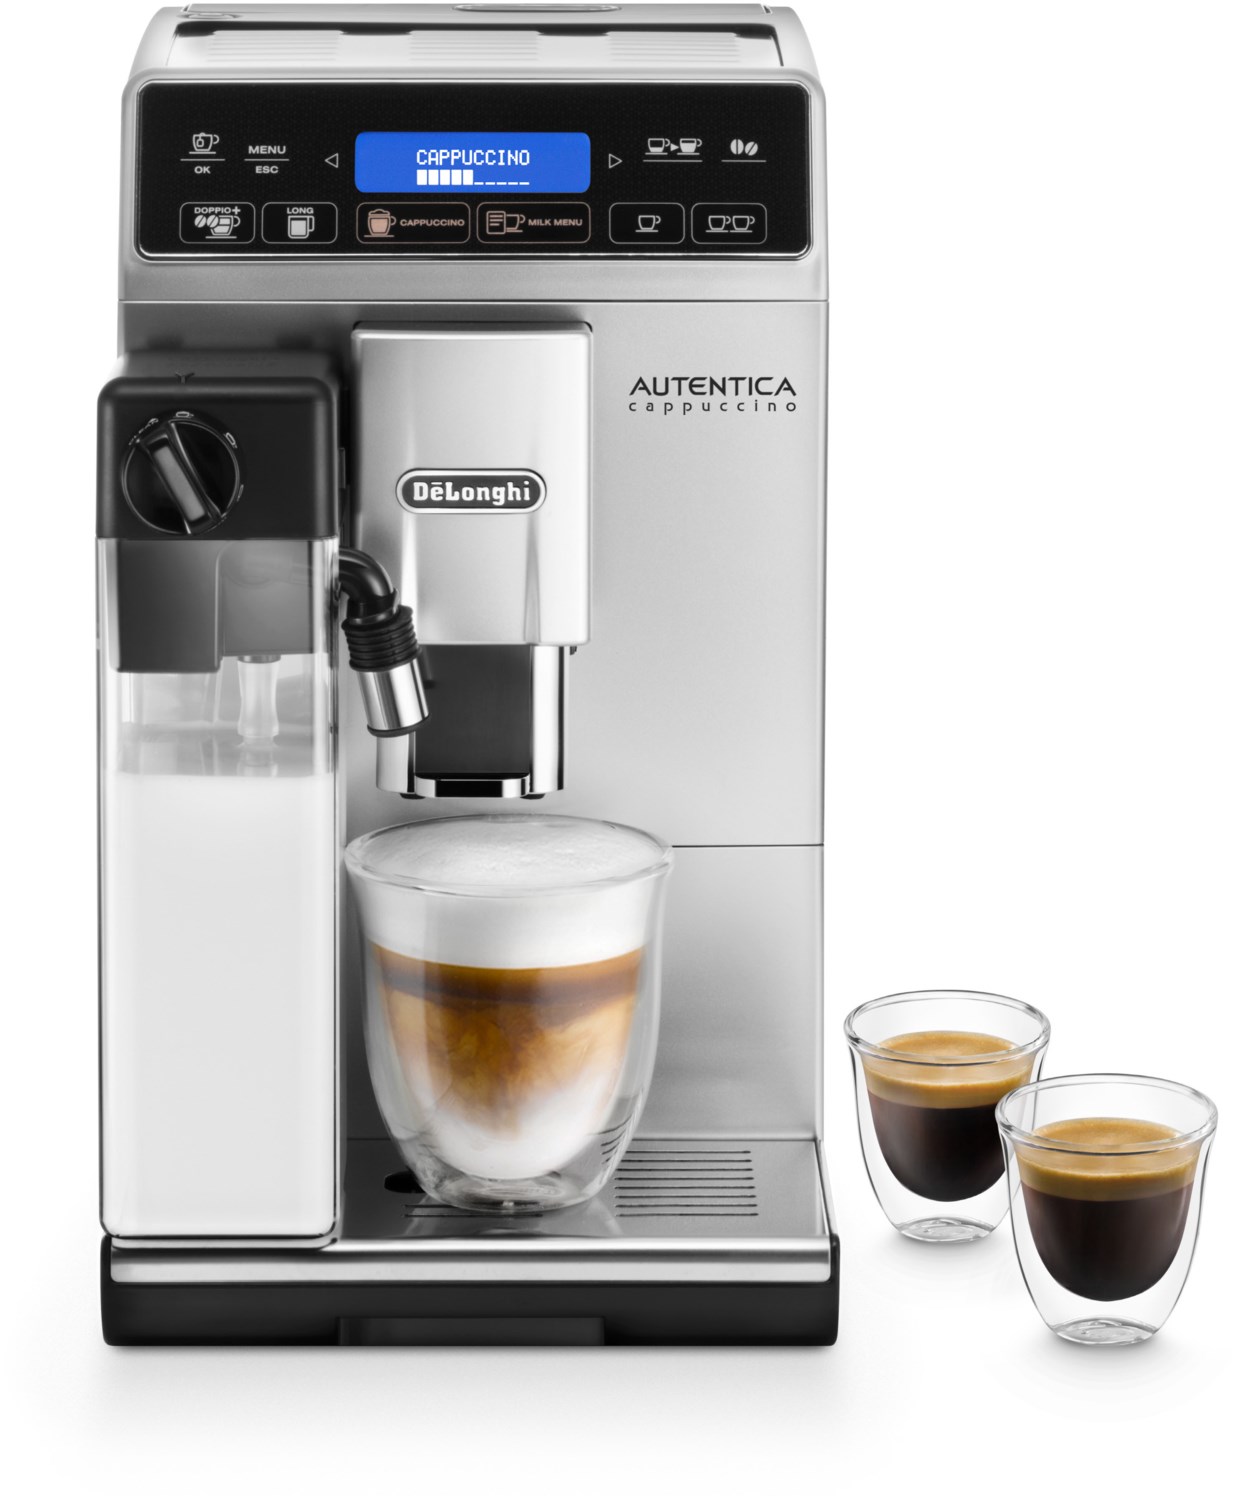 ETAM 29.660.SB Autentica Cappuccino Kaffee-Vollautomat silber/schwarz